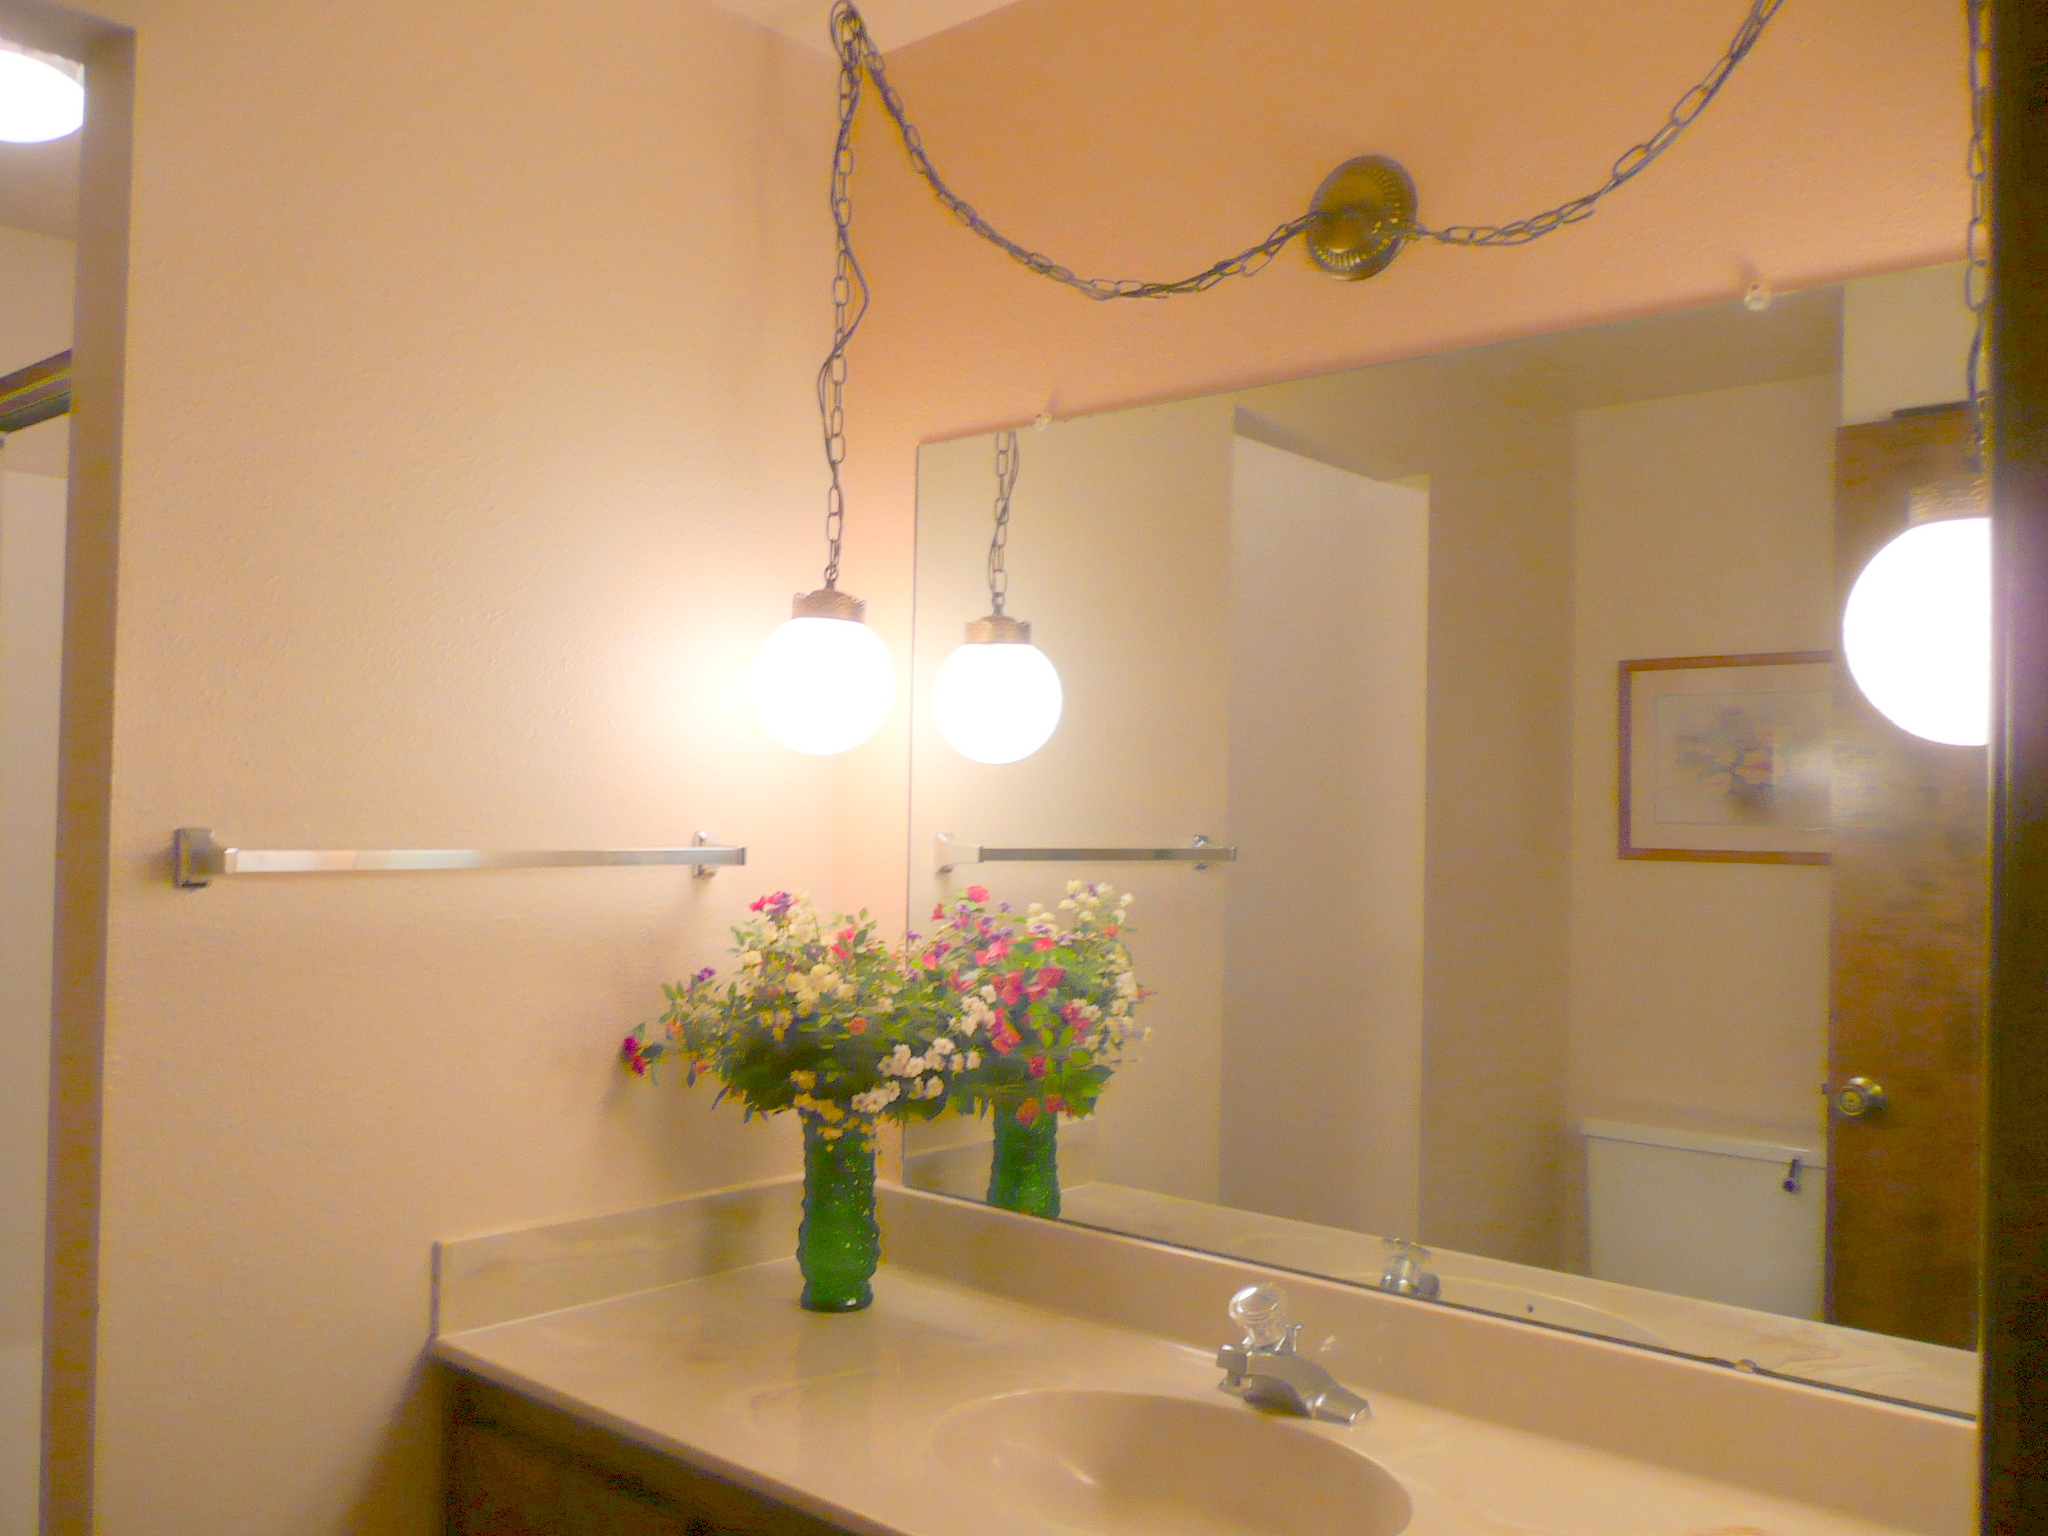 Updating Bathroom Vanity Lighting - Tips for Home Sellers - Home ...